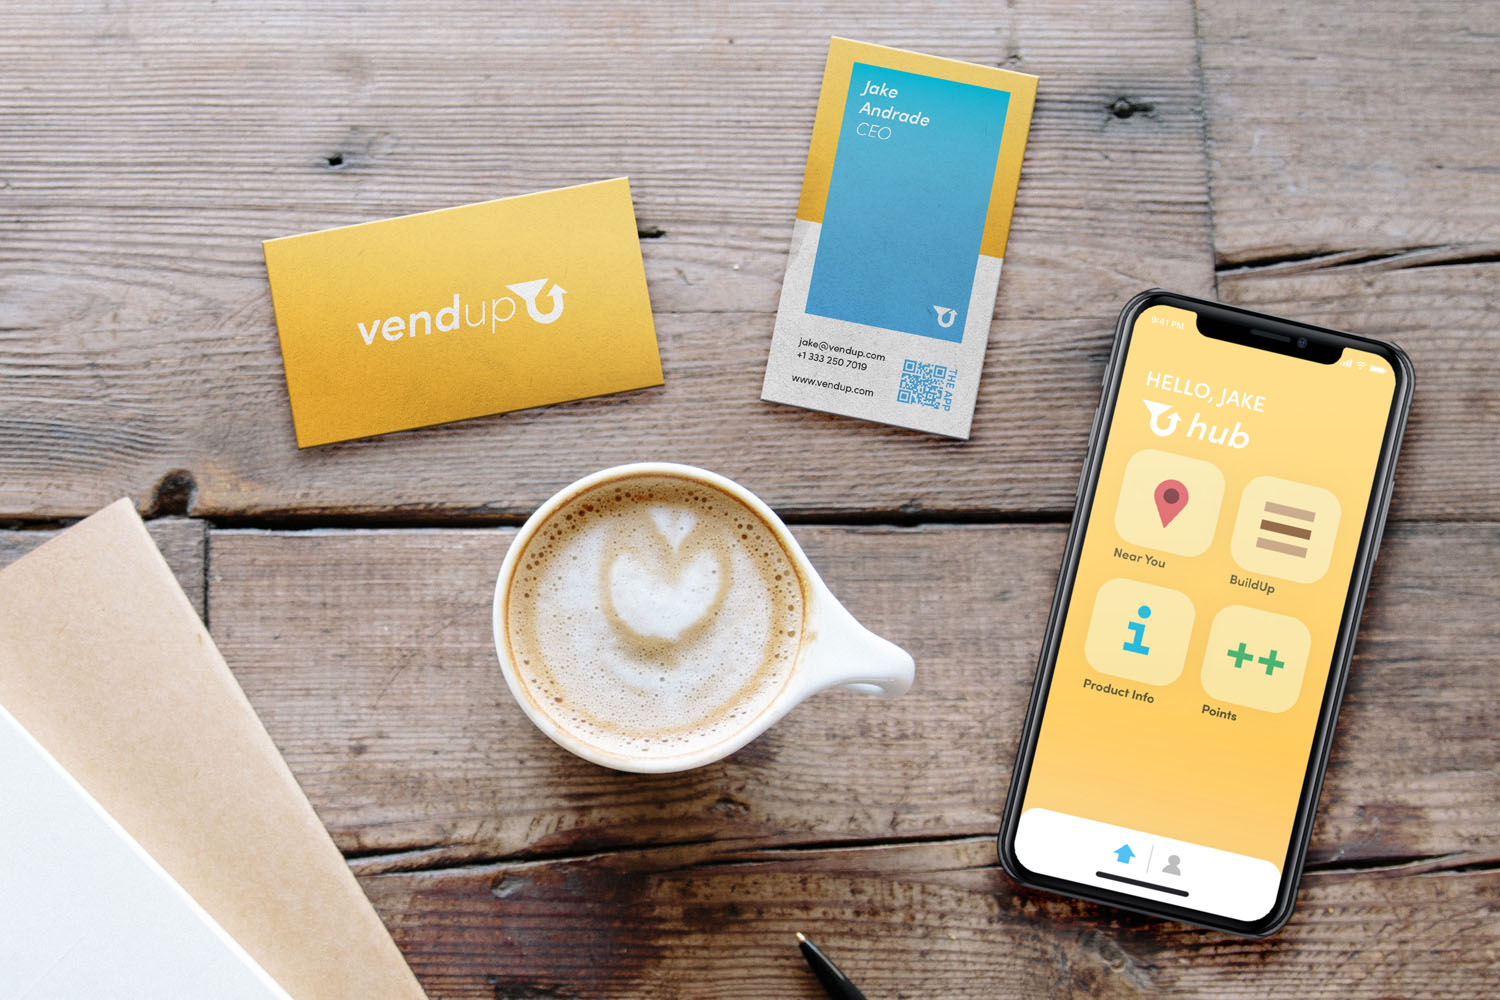 Vendup Business Cards & App